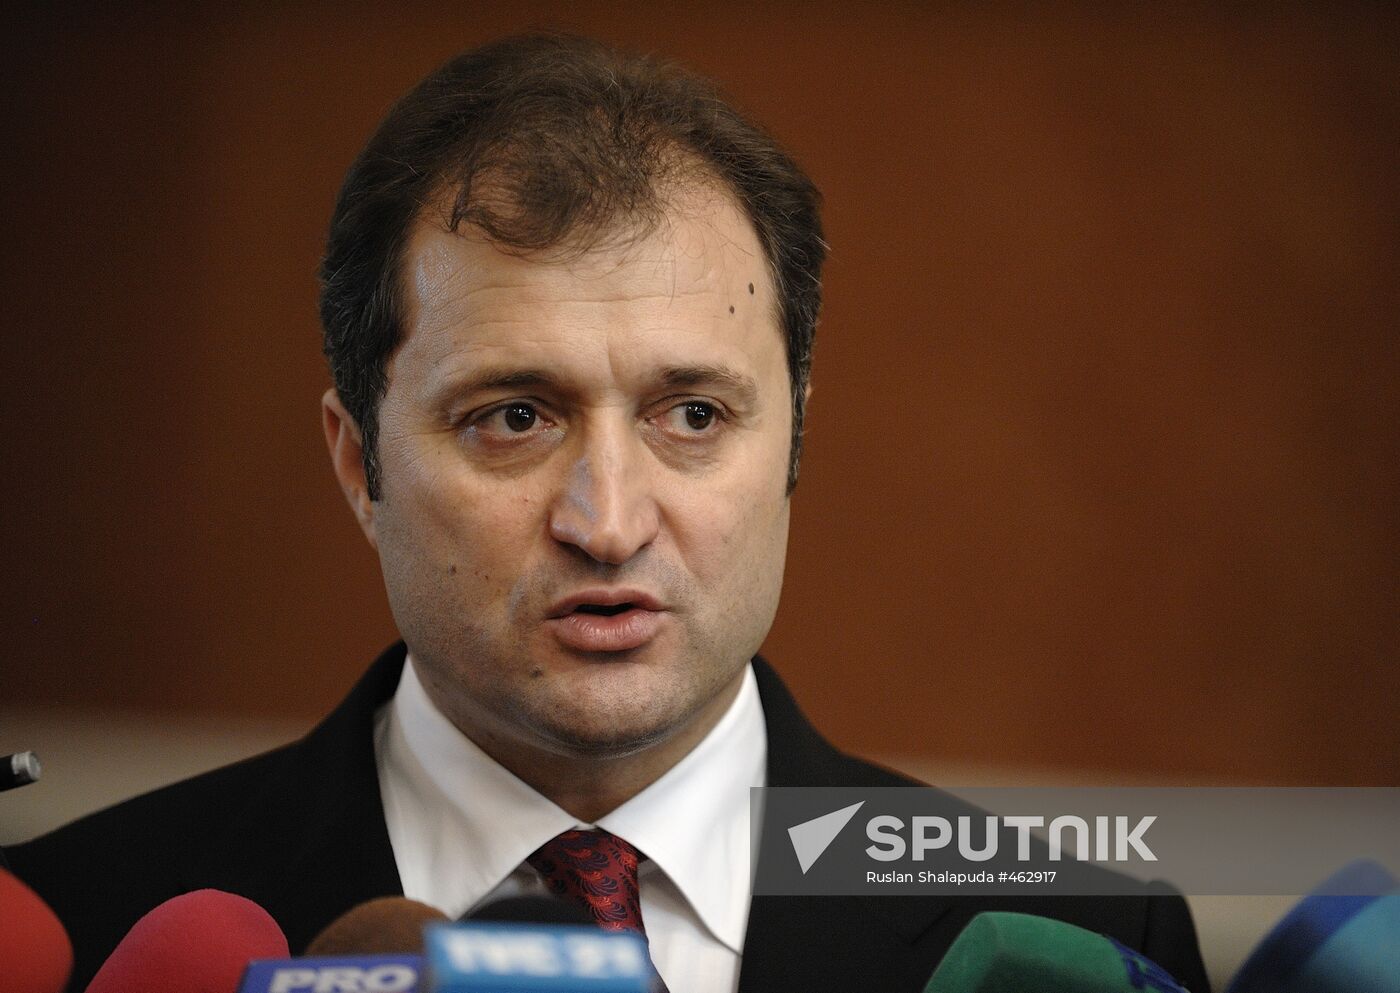 New Moldovan PM Vladimir Filat